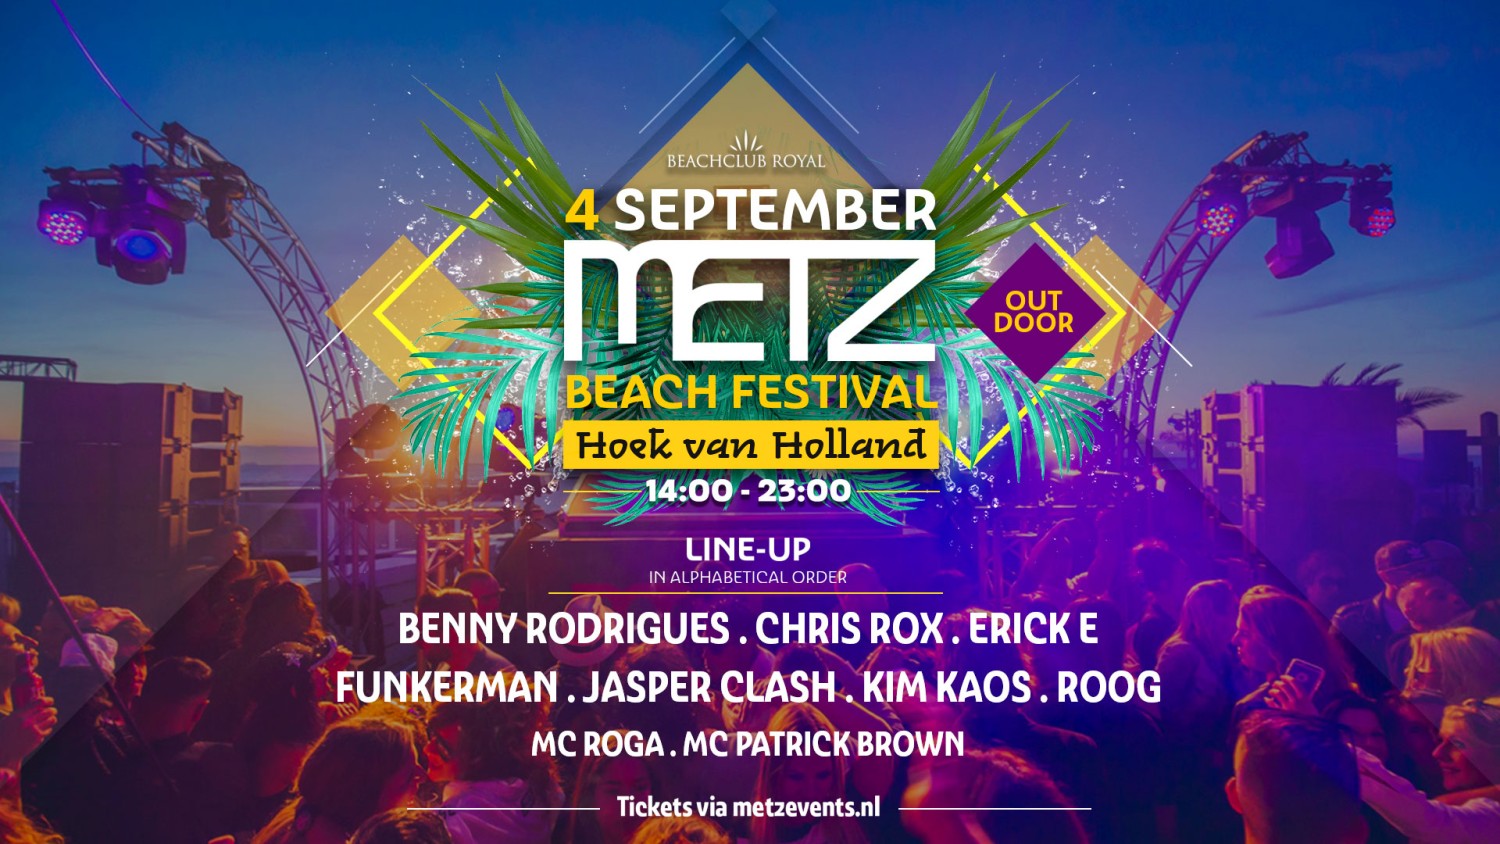 METZ Beach Festival